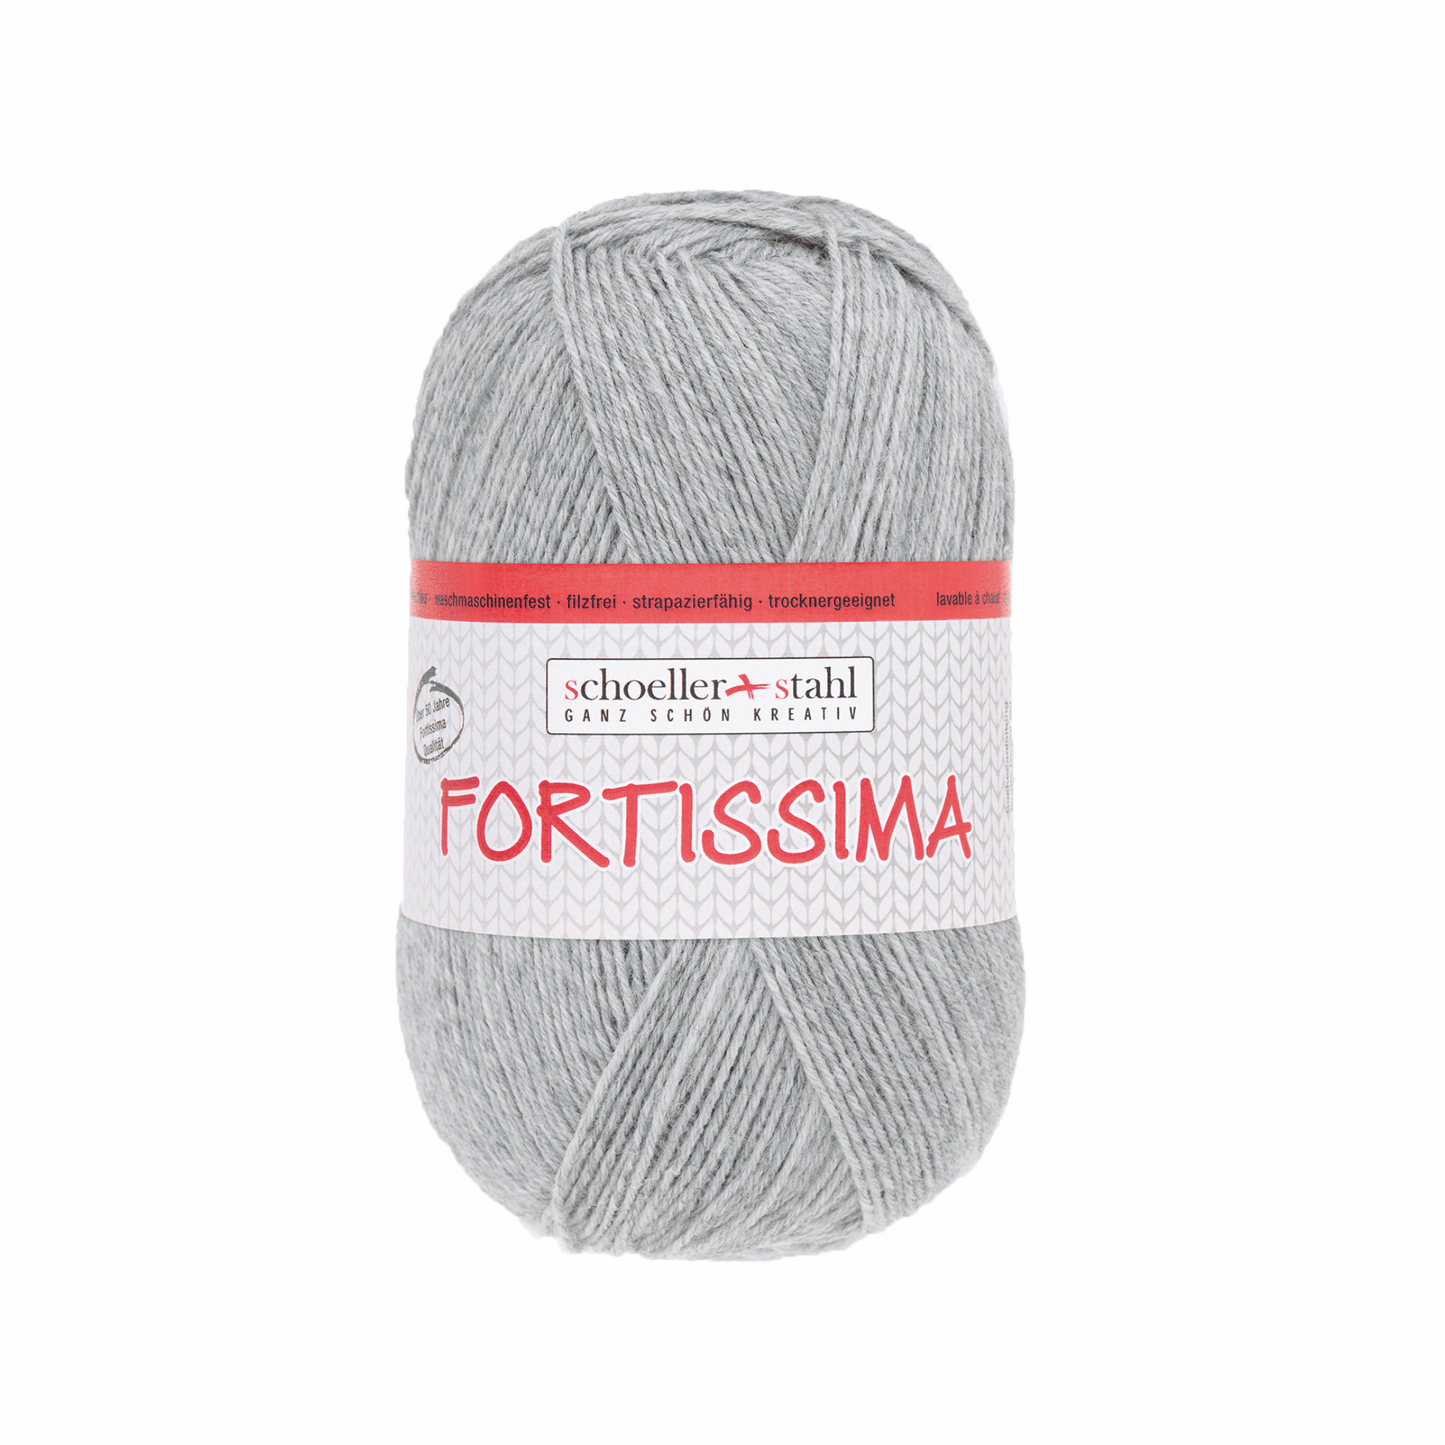 Fortissima socka 100, 90038, Farbe 2055, grau meliert